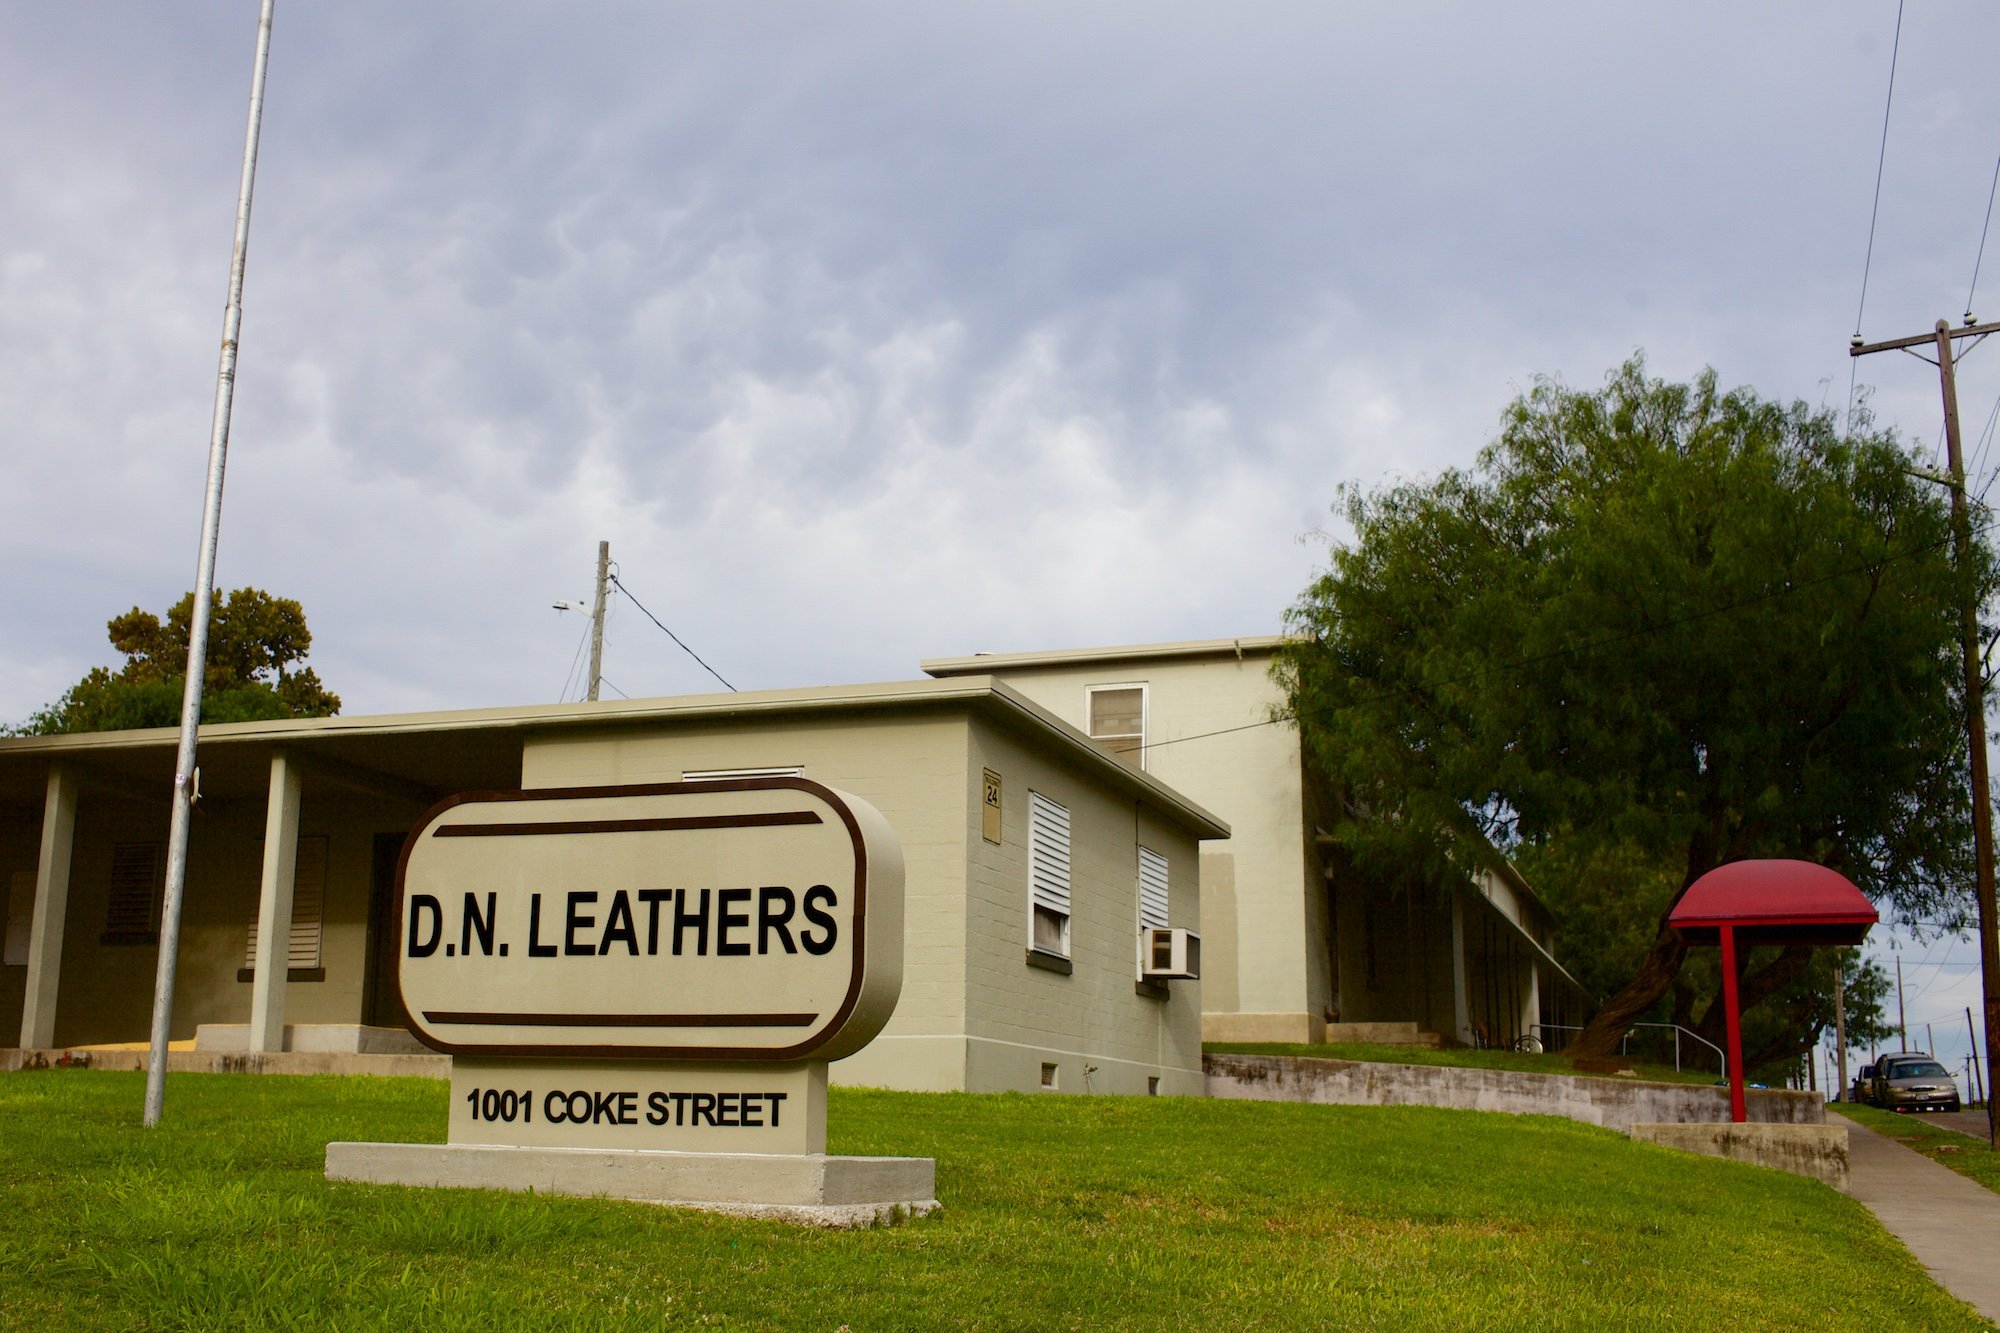 The D.N. Leathers public housing complex